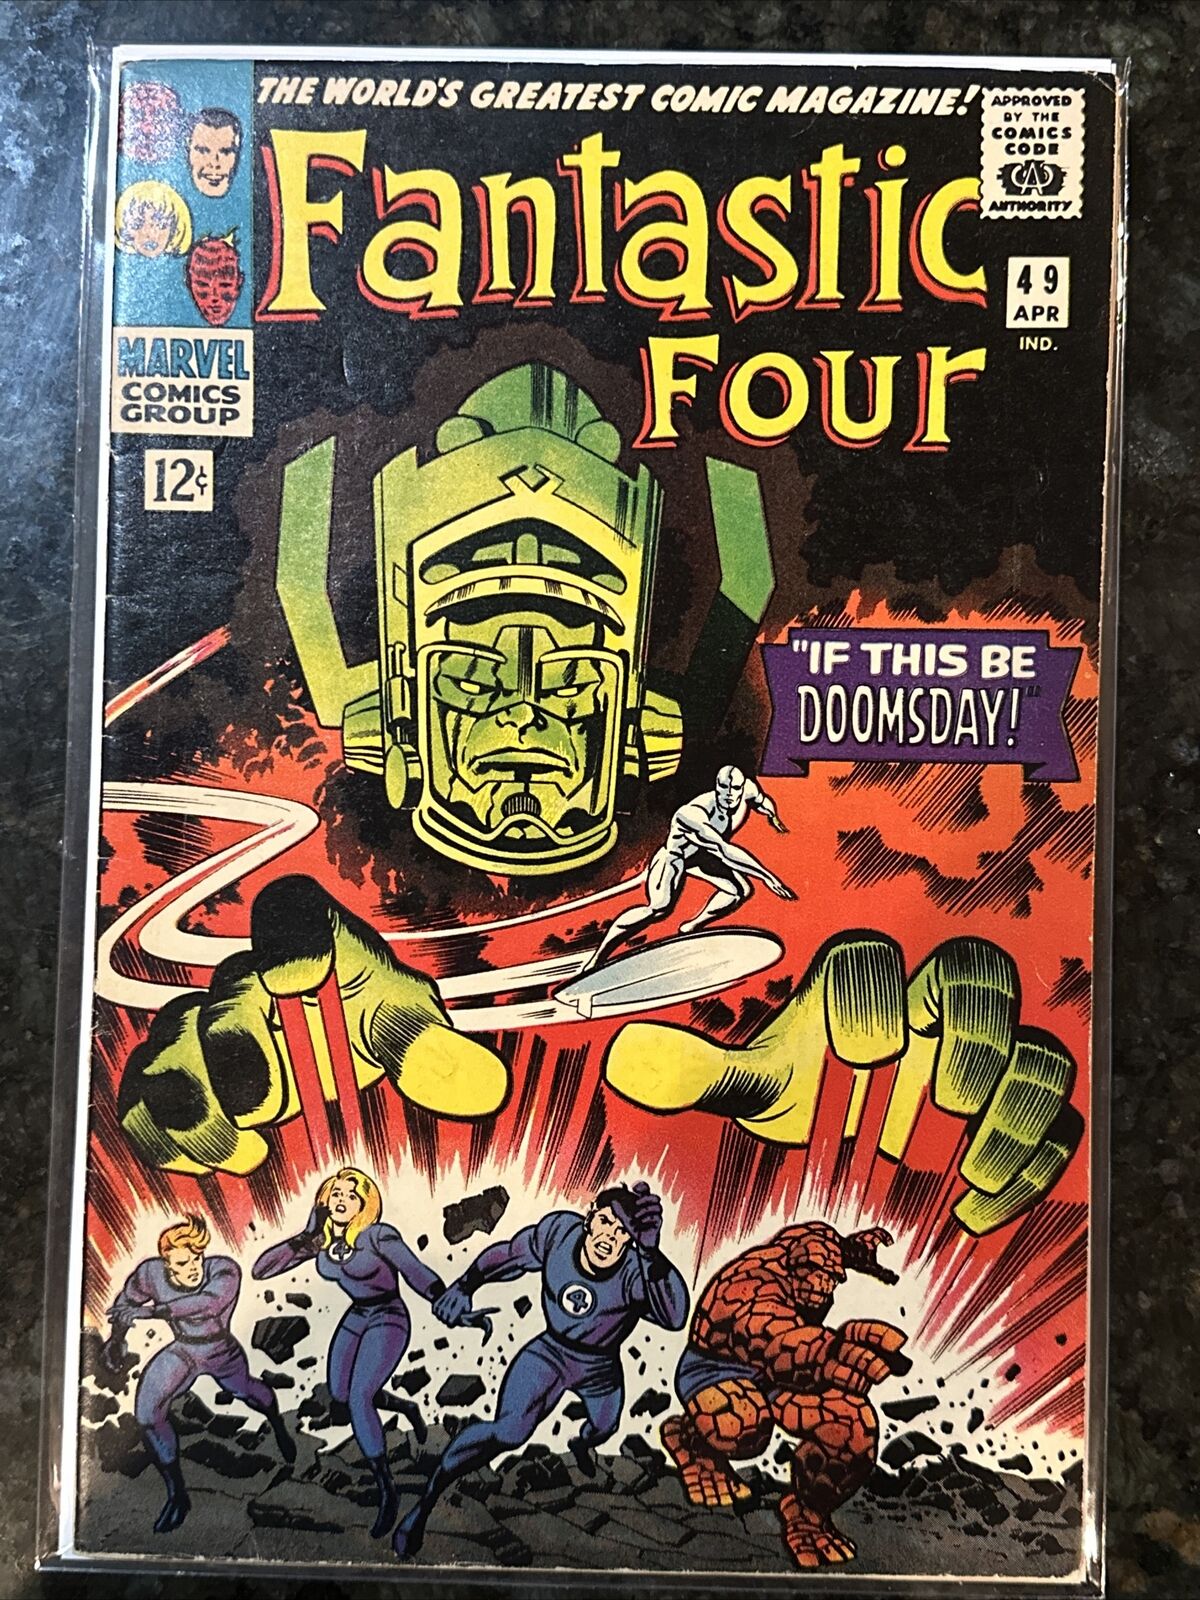 Fantastic Four #49 1966 Key Marvel Comic Book 1st Full Appearance Of Galactus